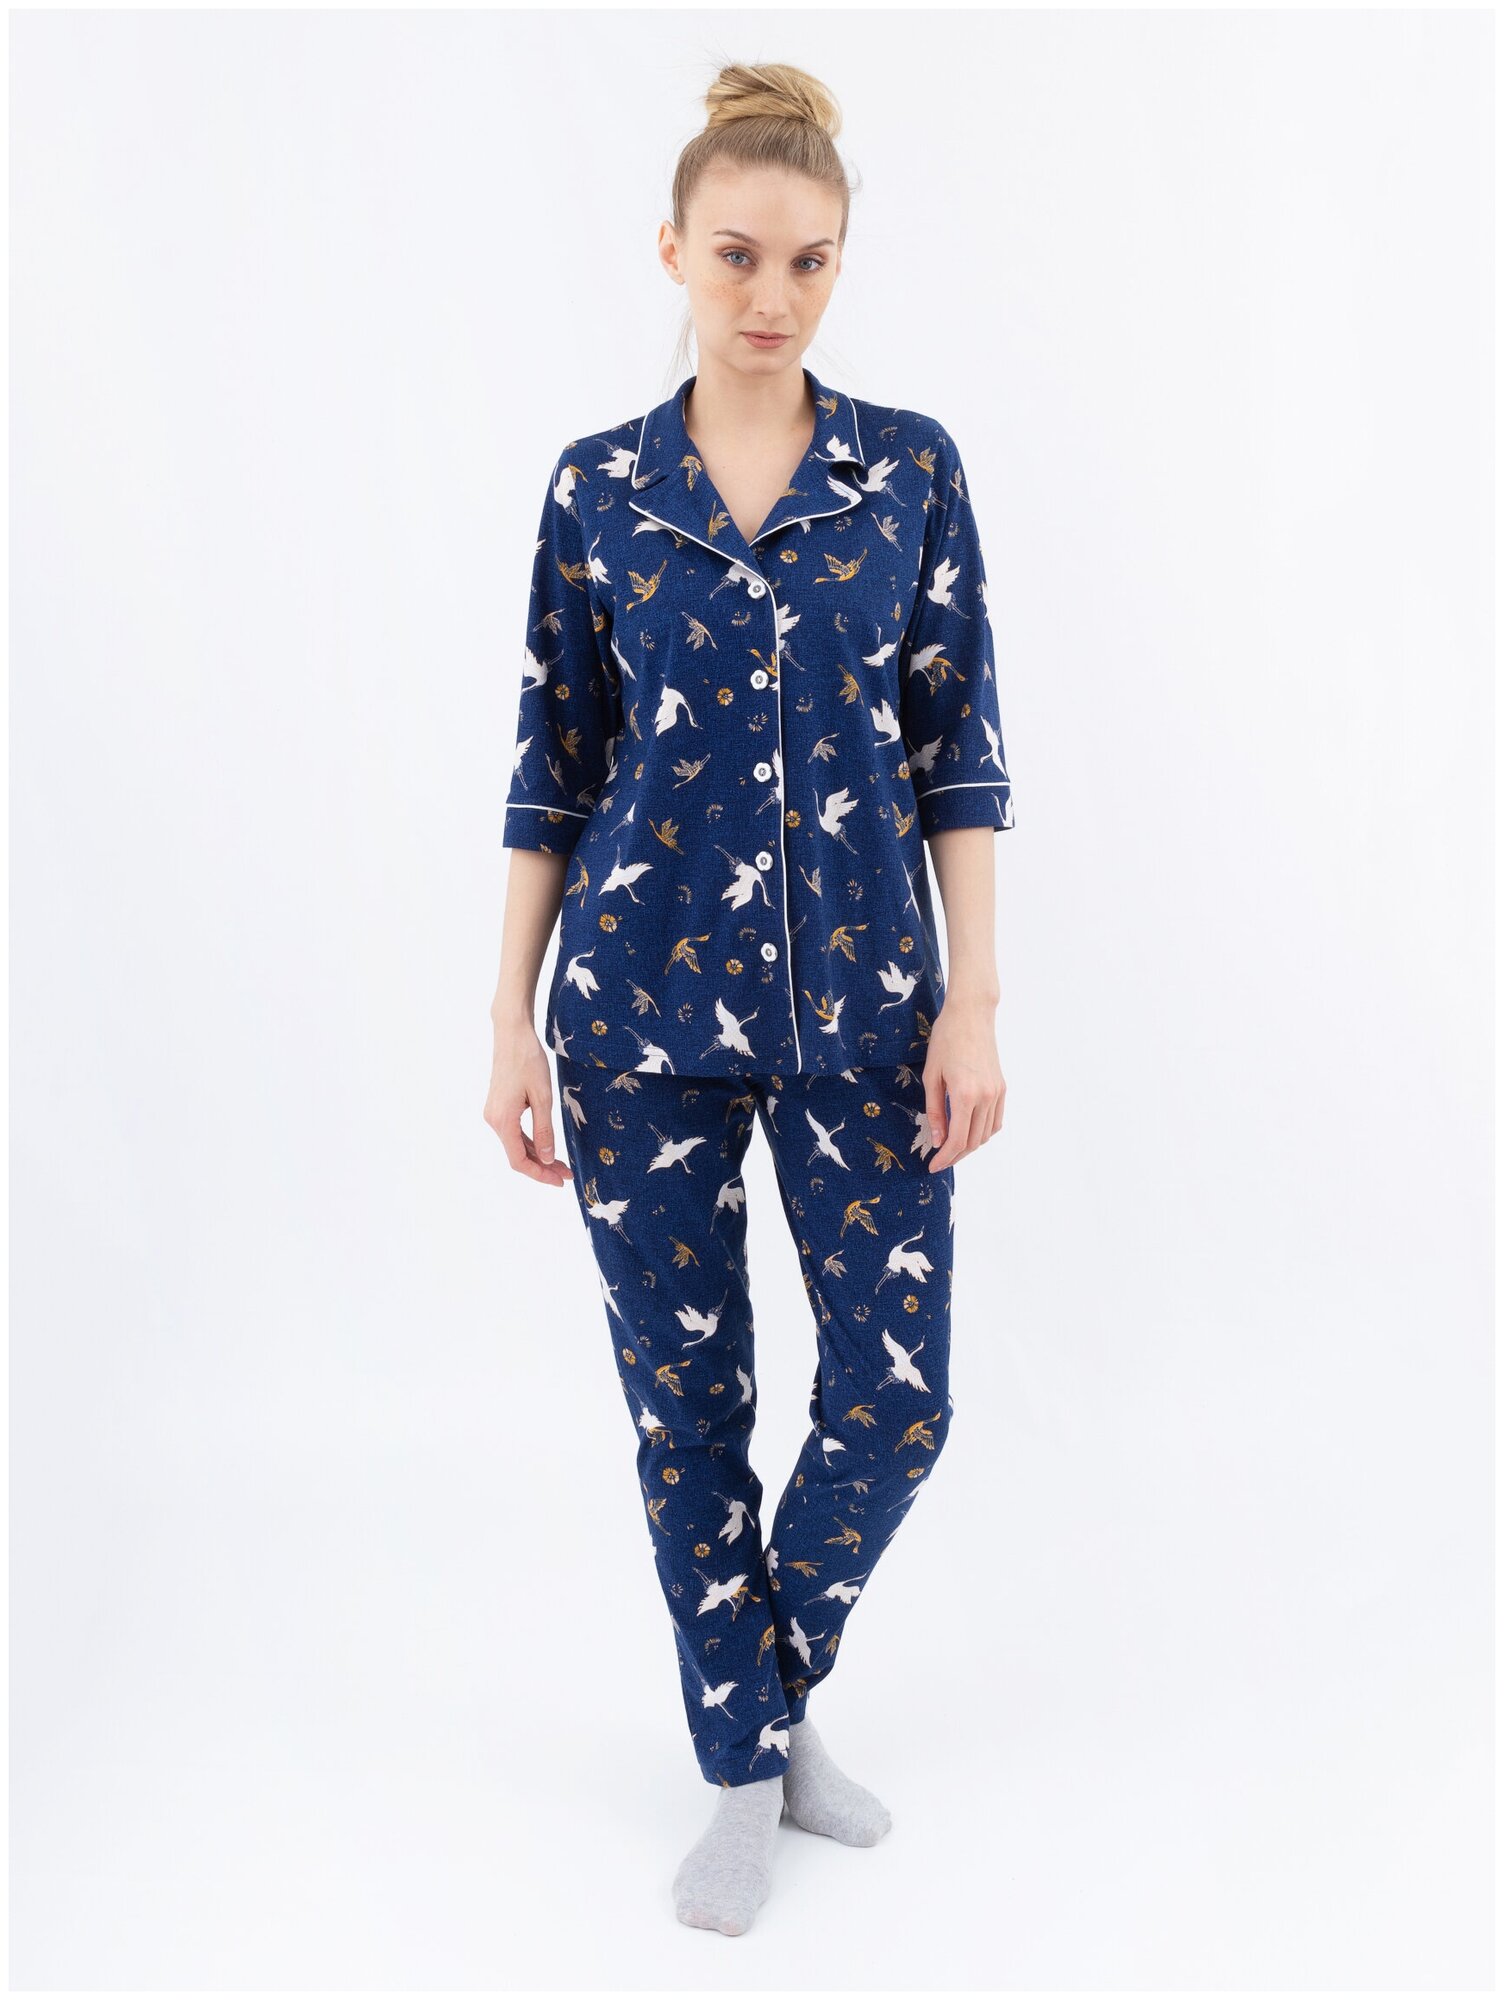 Пижама Монотекс, брюки, рубашка, короткий рукав, размер 48, синий - фотография № 1